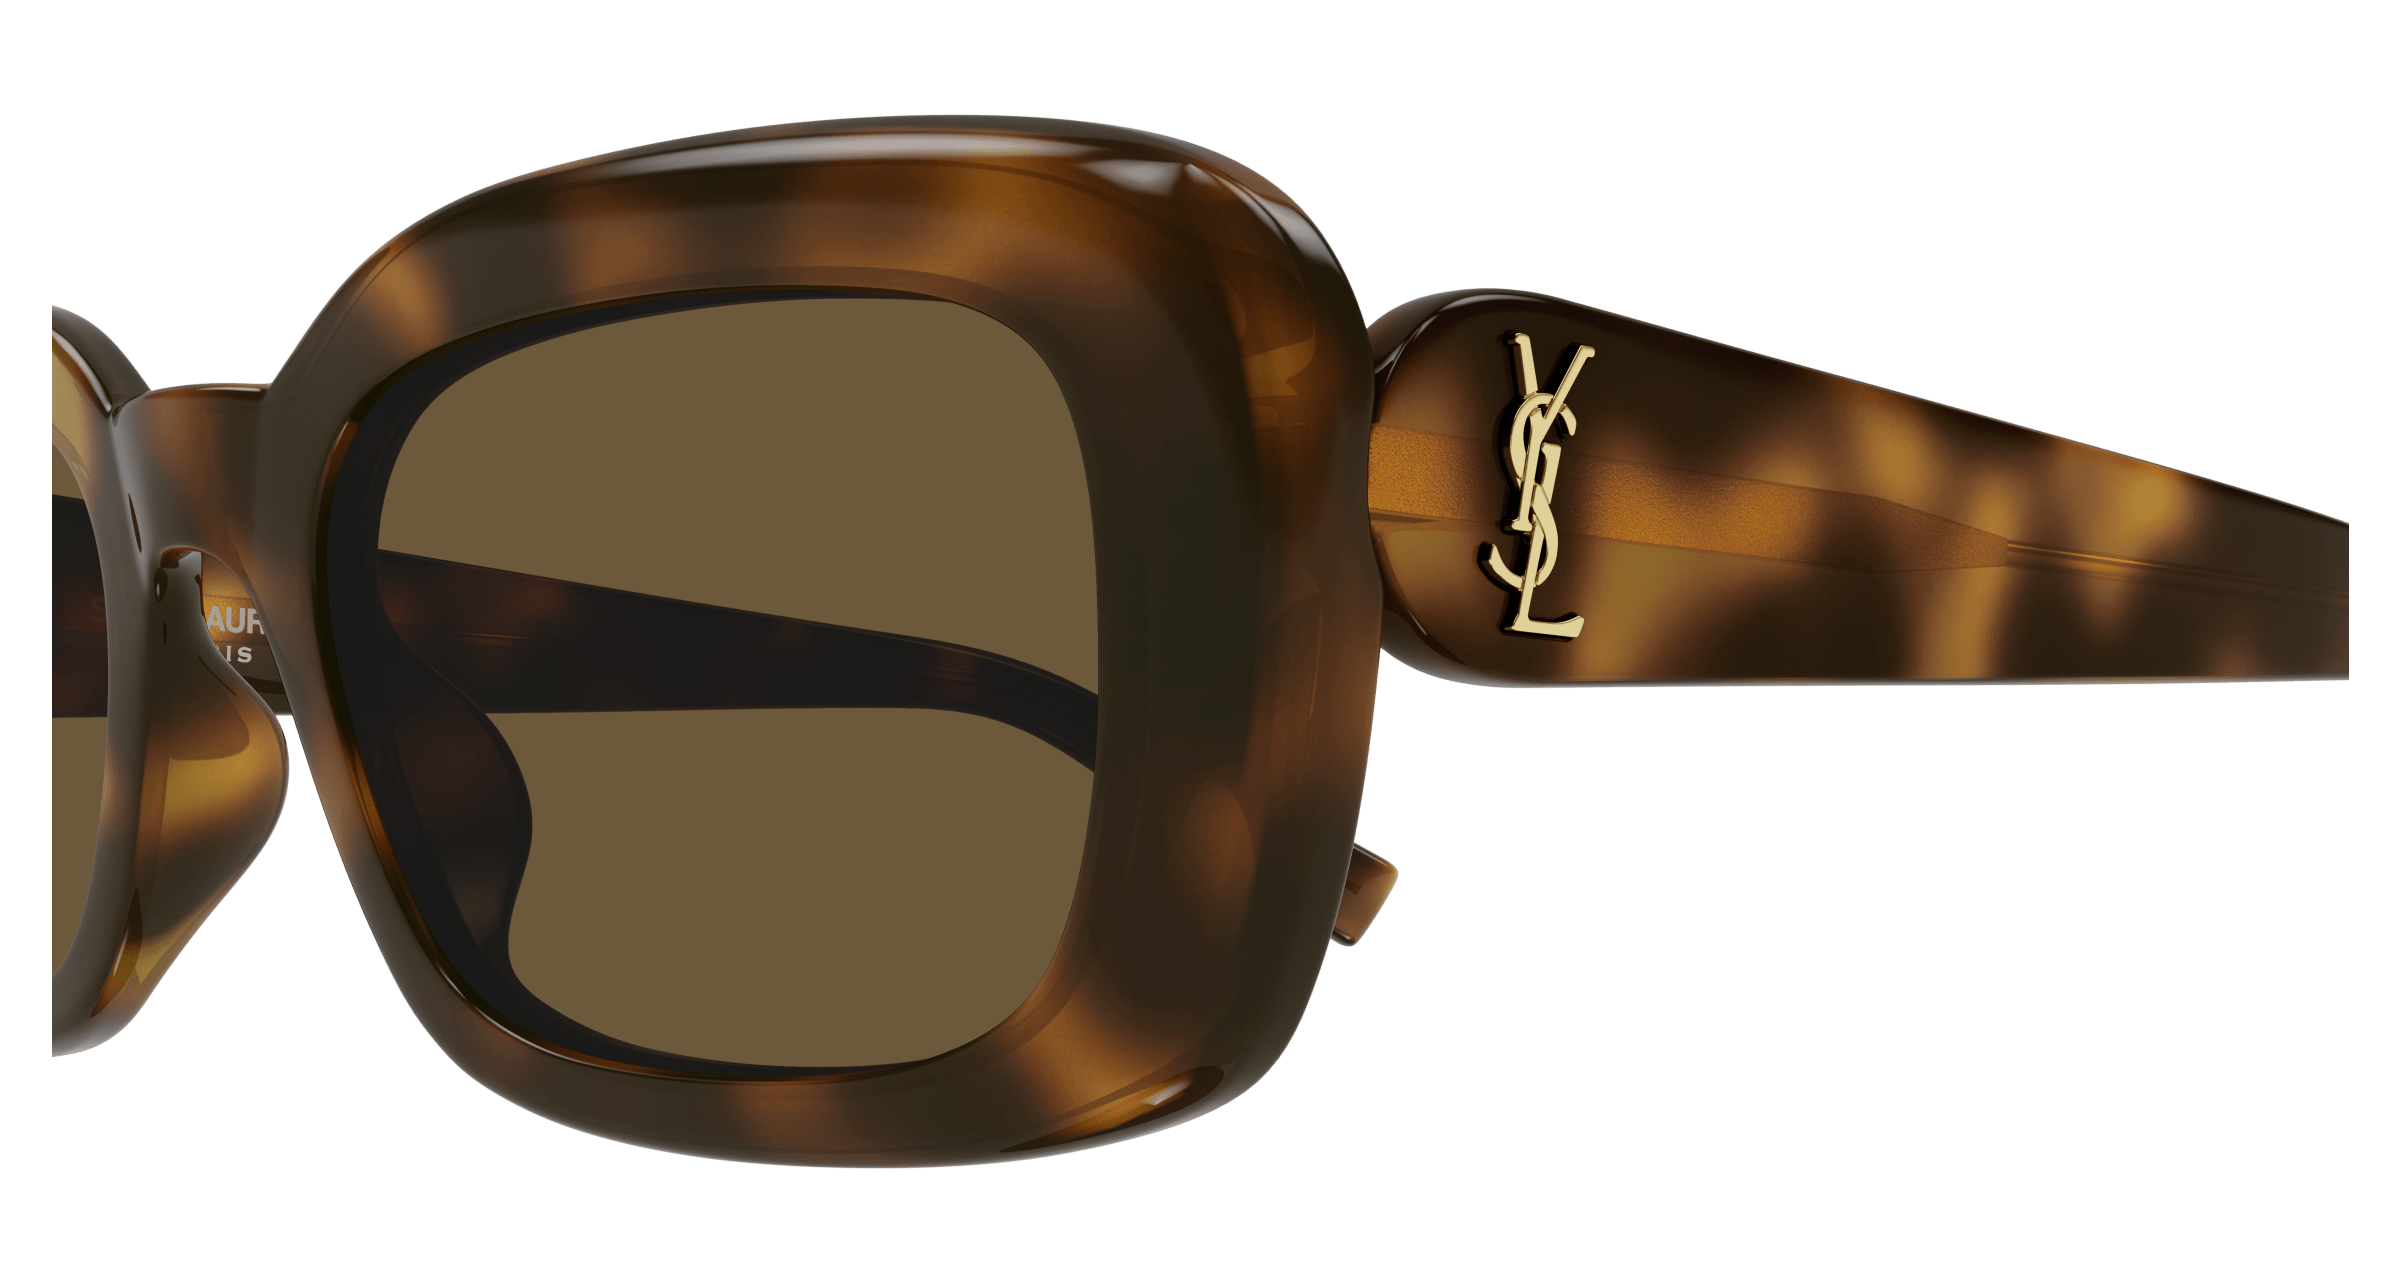 Saint Laurent Sunglasses SLM130-004